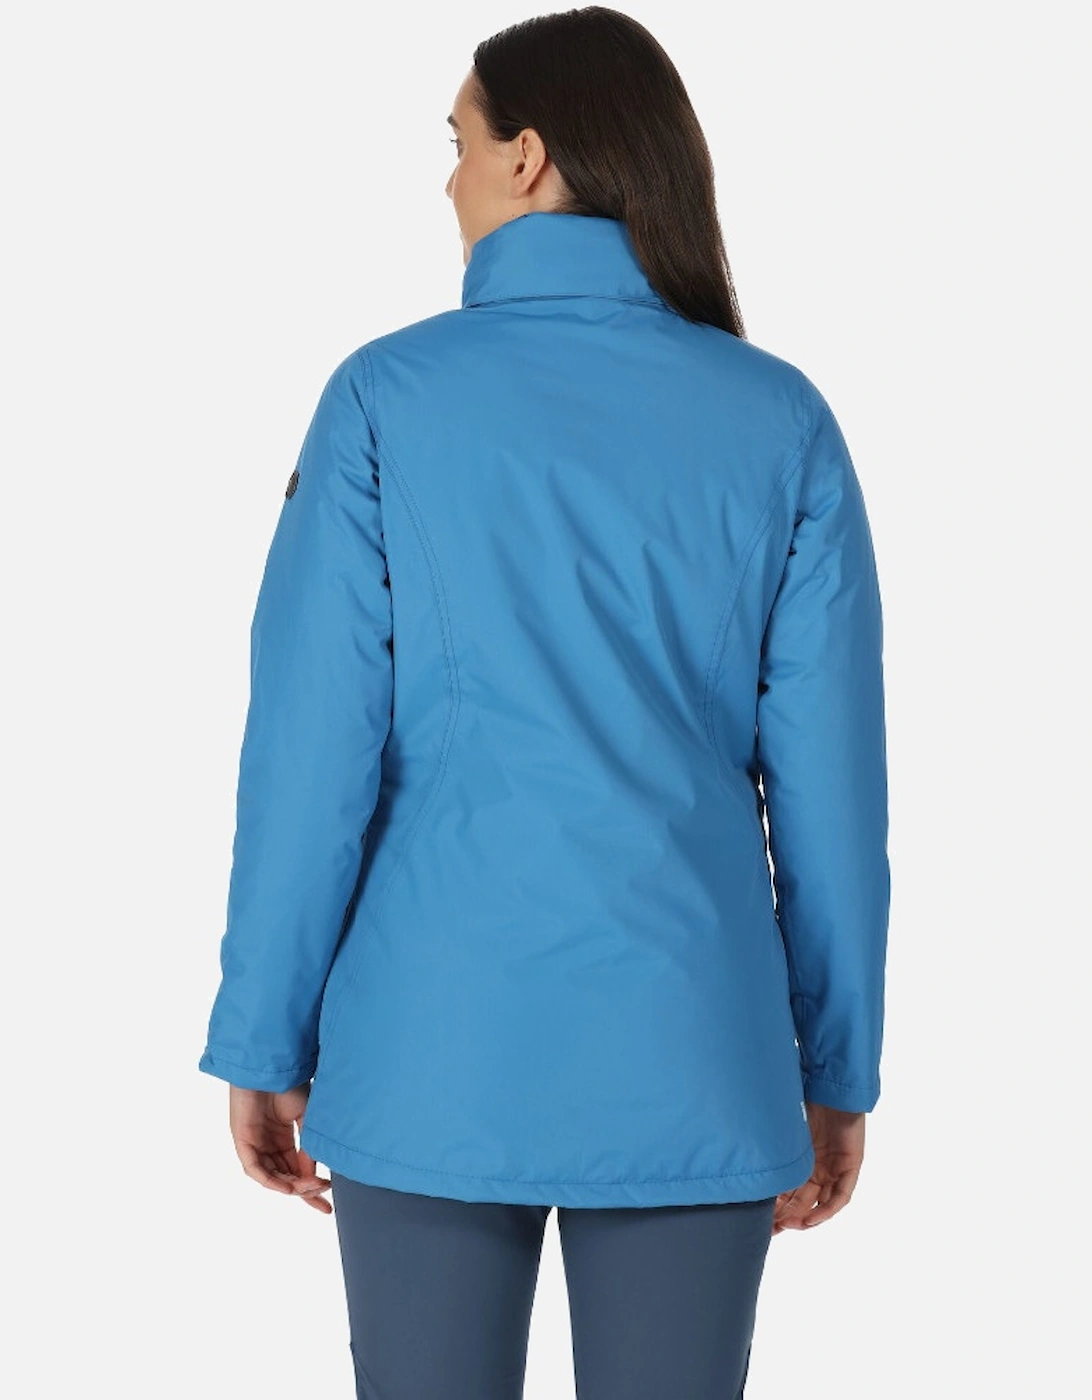 Womens Ladies Blanchet Waterproof Insulated Jacket